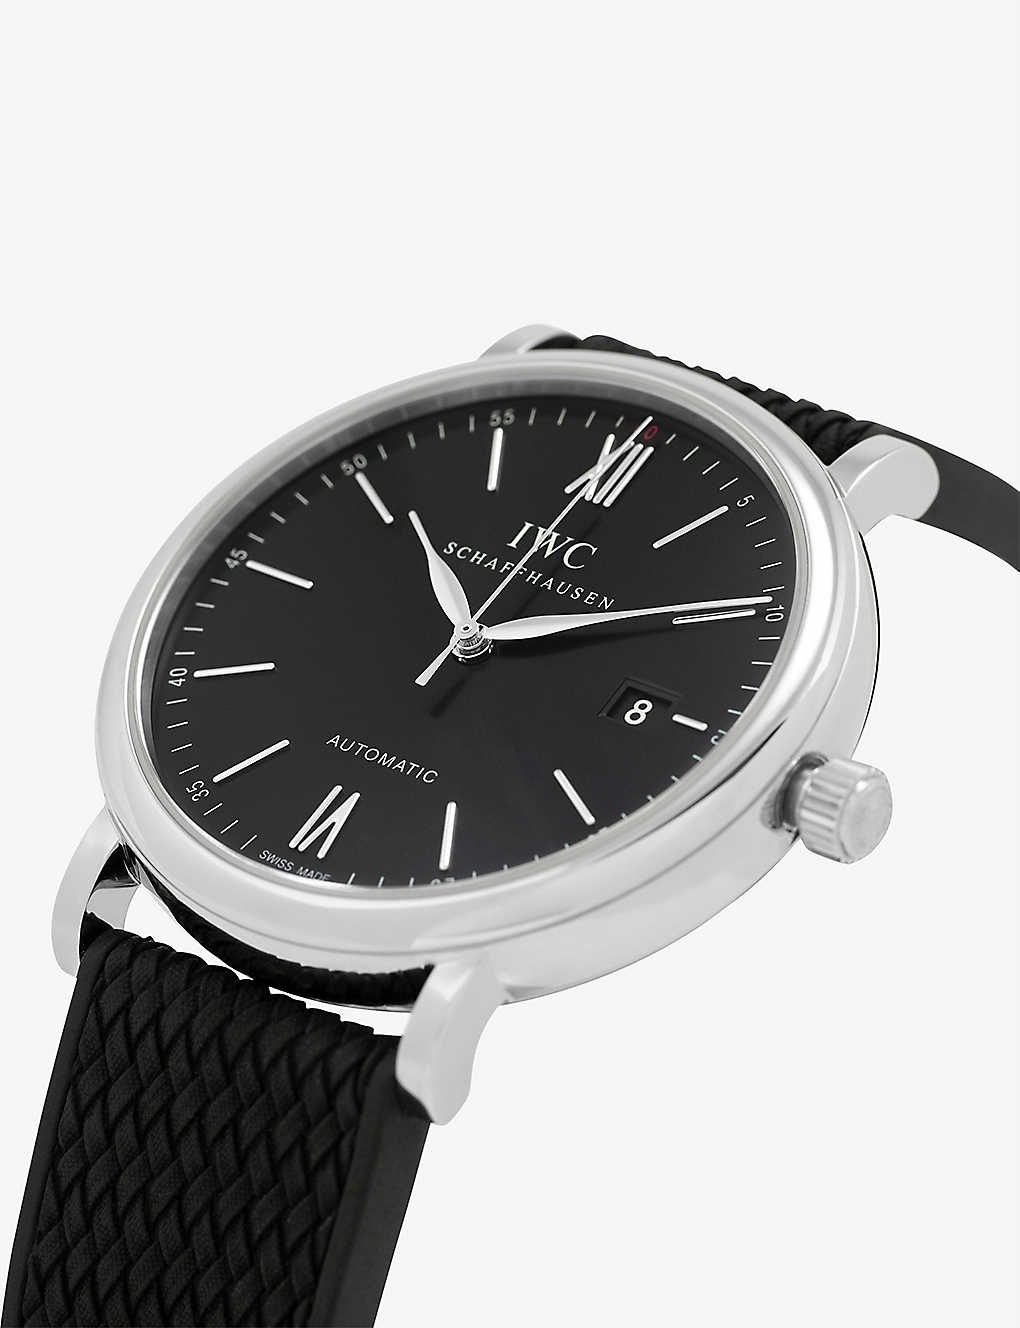 IW356502 Portofino stainless steel automatic watch - 2